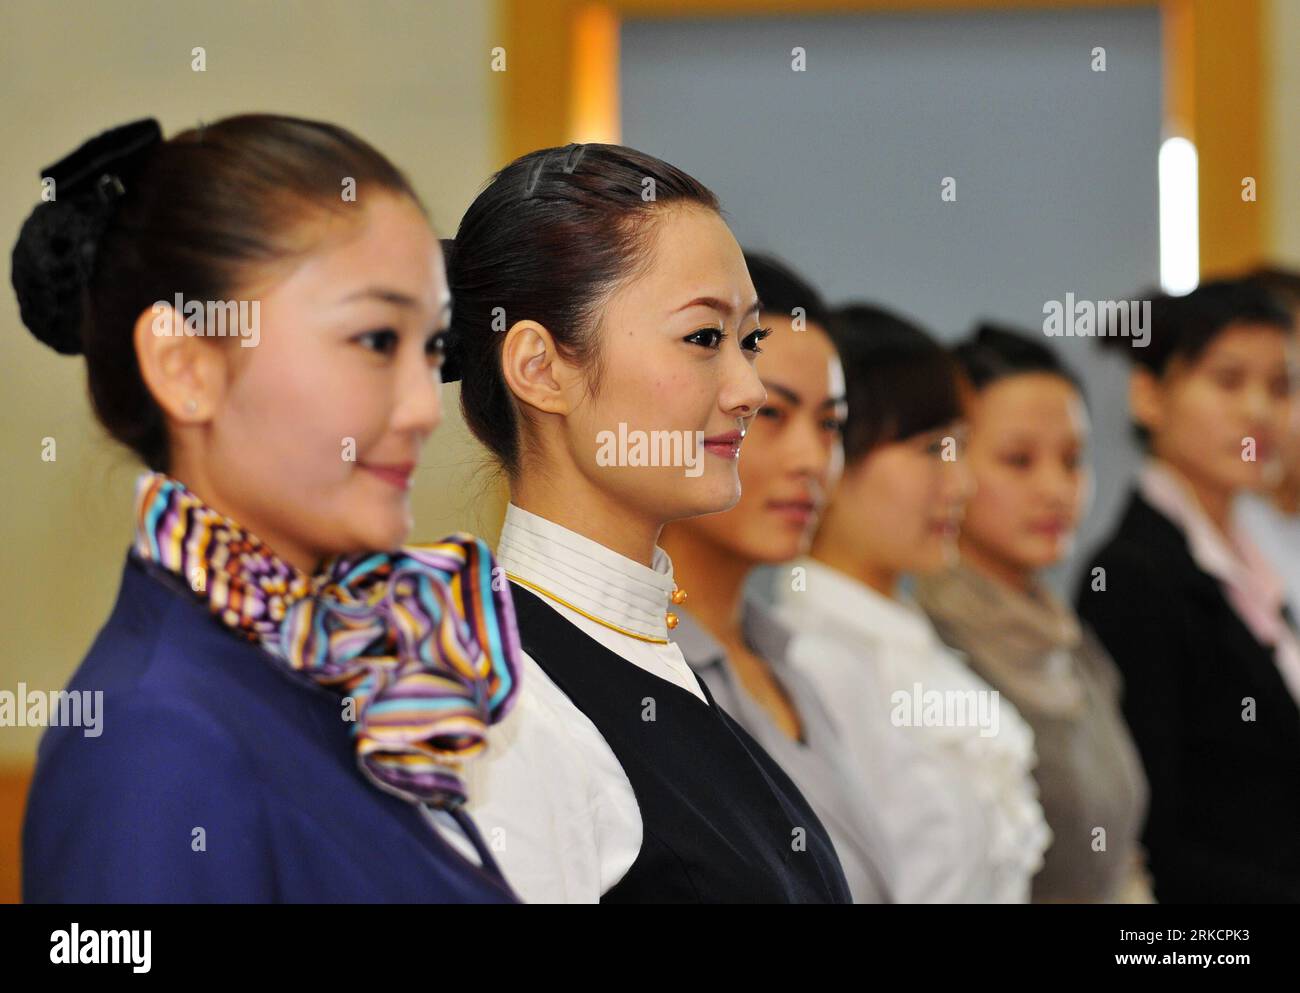 Bildnummer: 54793193  Datum: 08.01.2011  Copyright: imago/Xinhua (110108) -- XIAMEN, Jan. 8, 2011 (Xinhua) -- Job applicants stand during an interview at the Xiamen Airlines in Xiamen, southeast China s Fujian Province, Jan. 8, 2011. Xiamen Airlines started a nationwide recruitment looking for 400 cabin crew on Saturday, attracting many applicants. The recruitment tour would be held in eight Chinese cities. (Xinhua/Wei Peiquan) (zhs) CHINA-XIAMEN-AIRLINES-RECRUIT (CN) PUBLICATIONxNOTxINxCHN Wirtschaft kbdig xkg 2011 quer  o0 Flugbegleiter, Flugbegleiterin, Rekrutierung, Einstellung, Einstellun Stock Photo